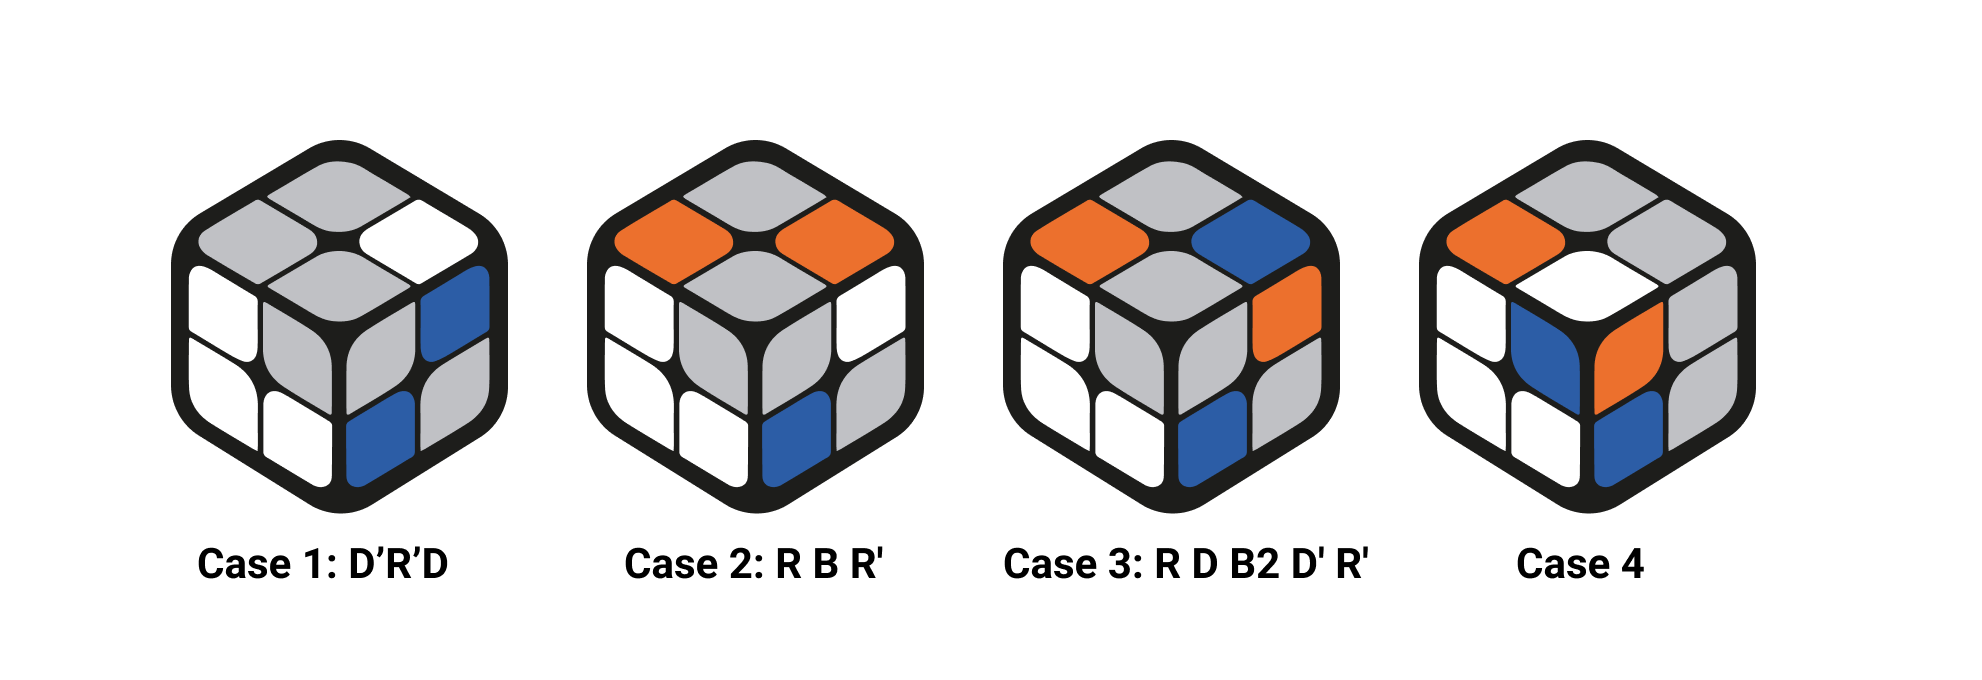 2x2x2 Case 4 - how to solve 2x2 rubik's cube